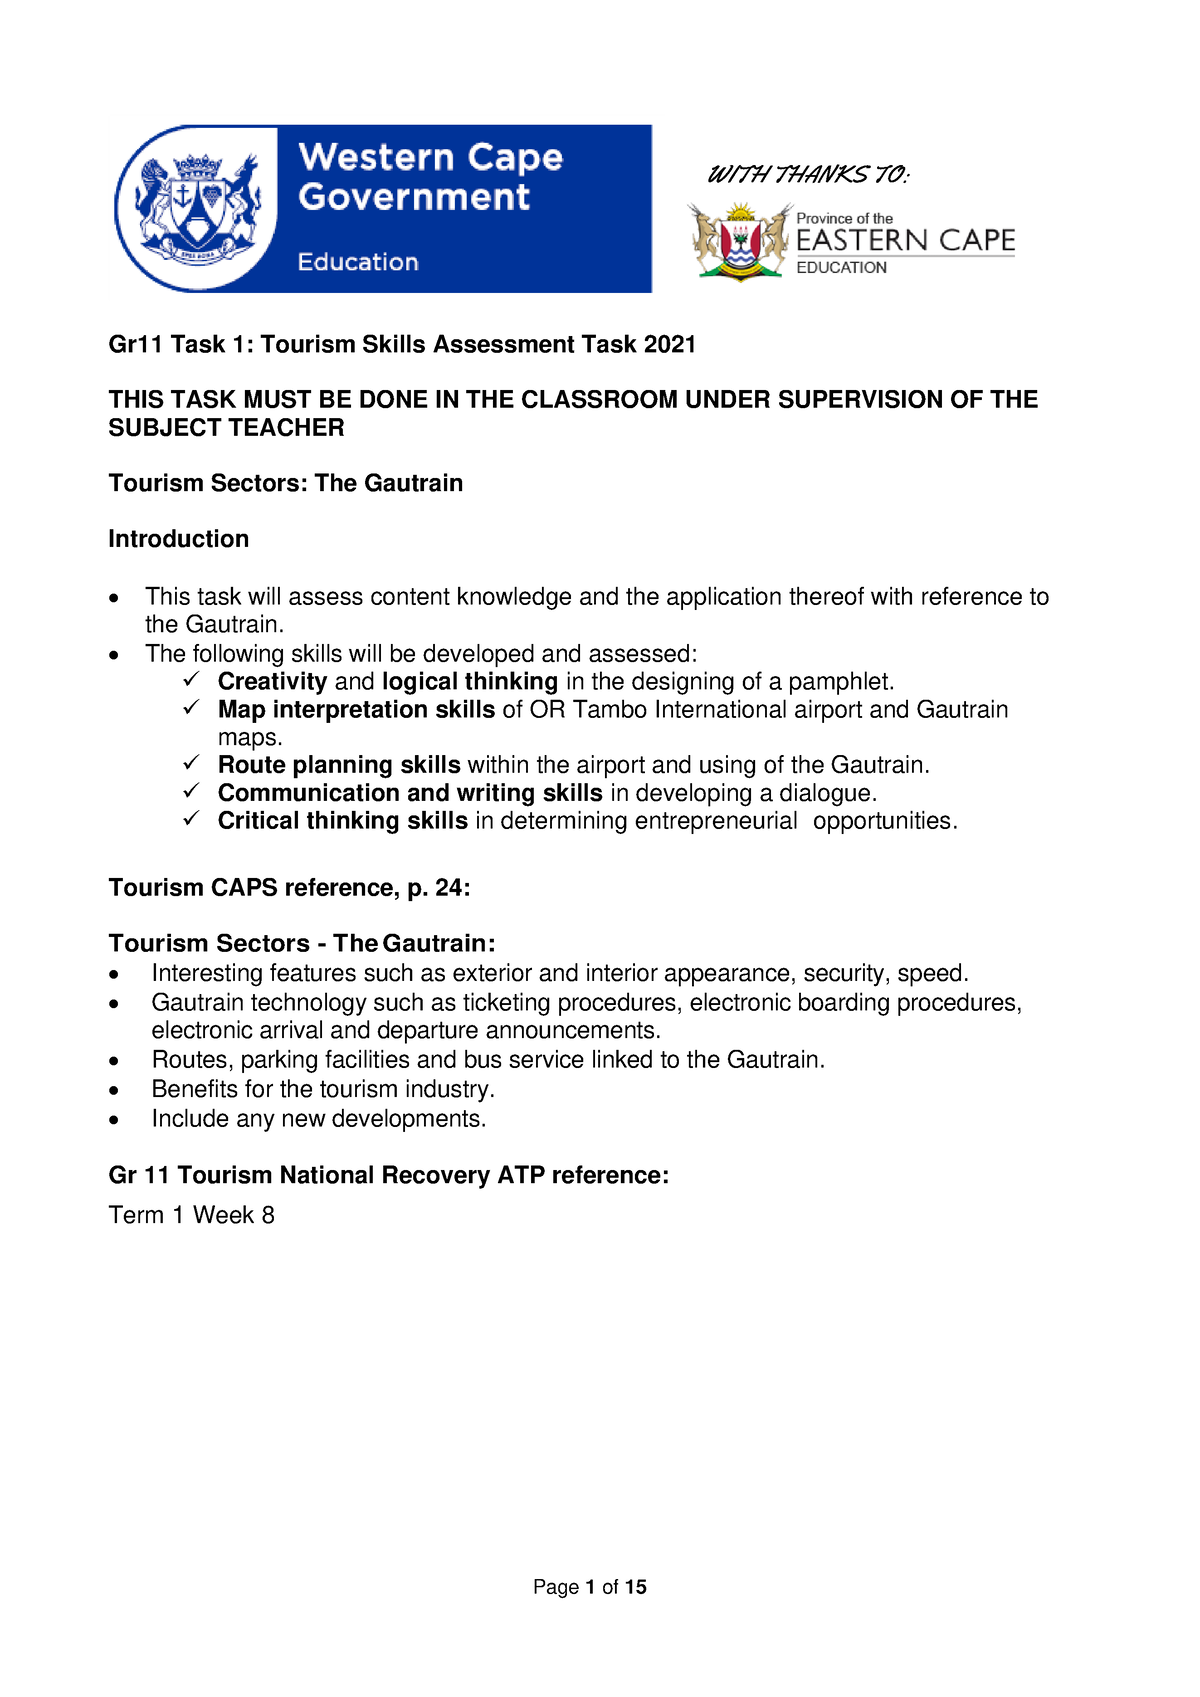 tourism past papers grade 11 term 2 pdf download